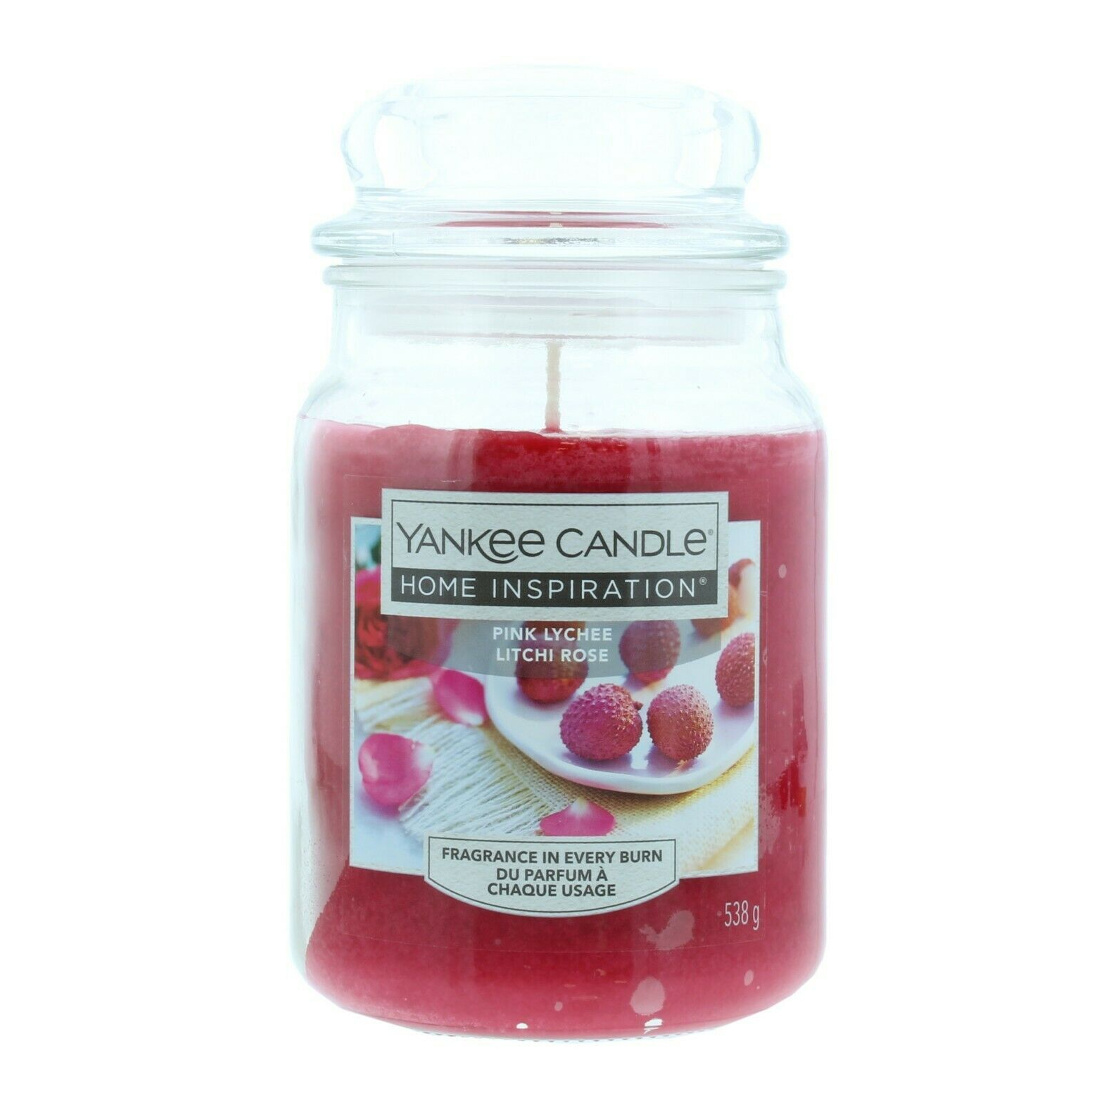 Yankee Candle Pink Lychee large jar